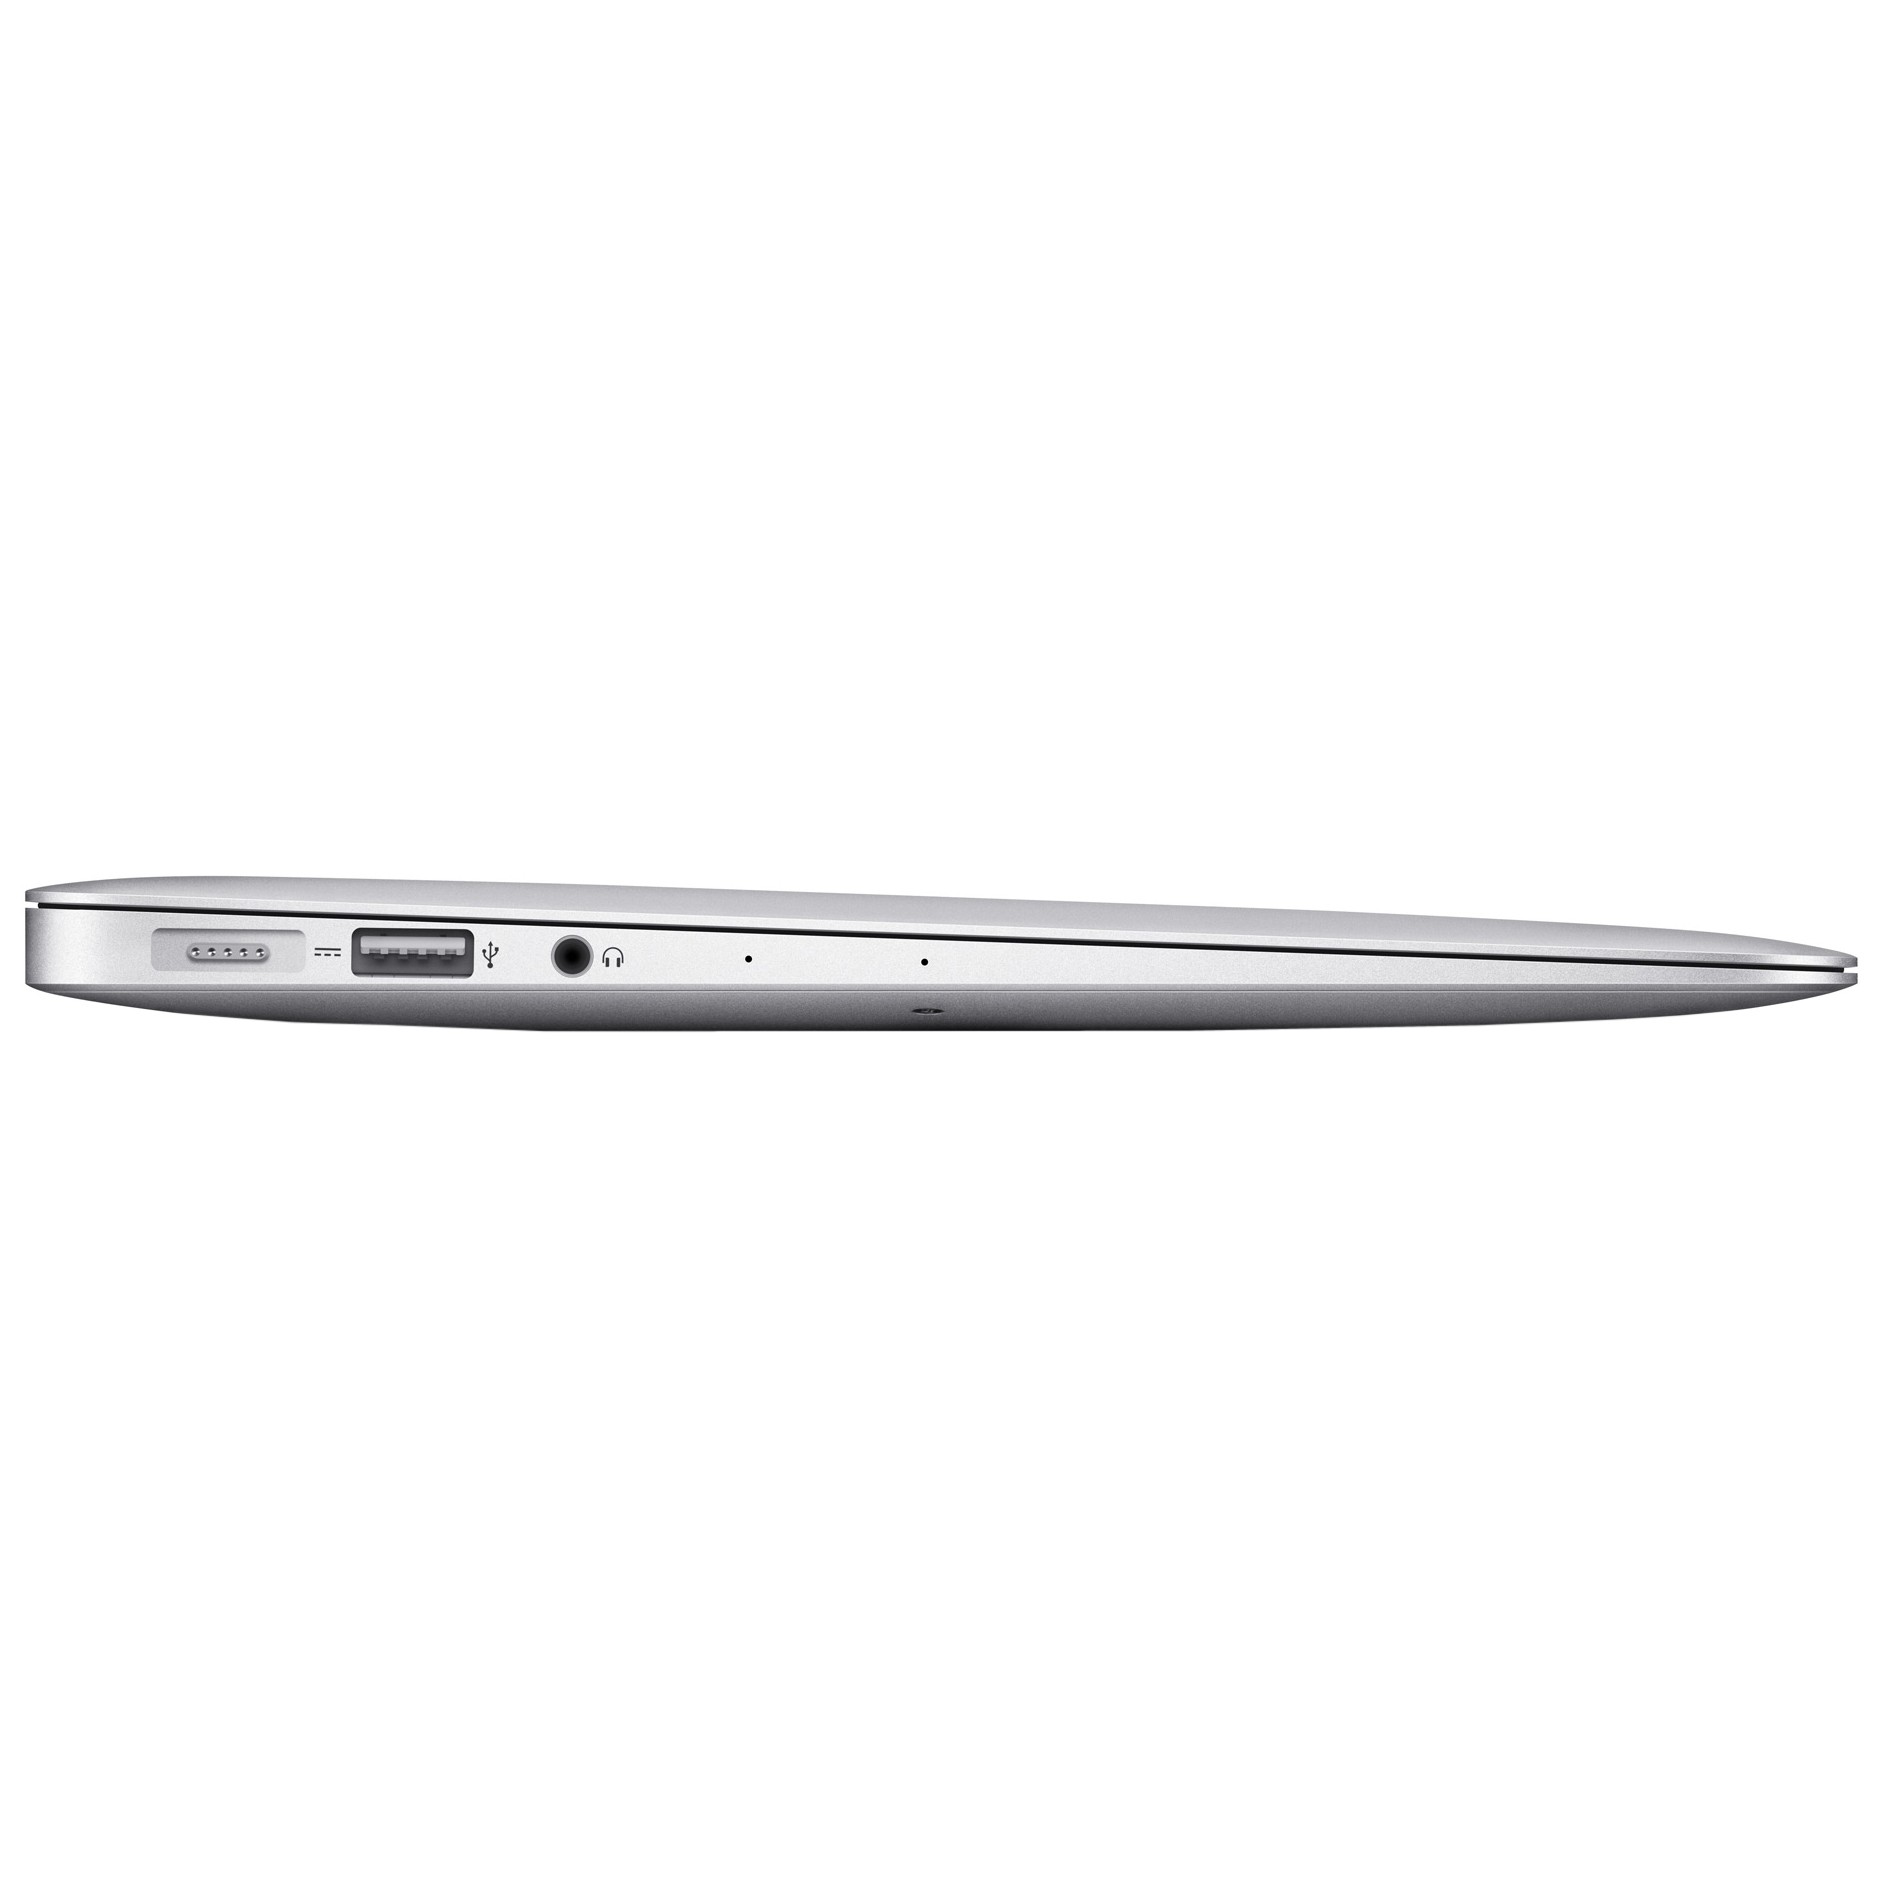 Ноутбук Apple MacBook Air 11" (MJVM2) 2015